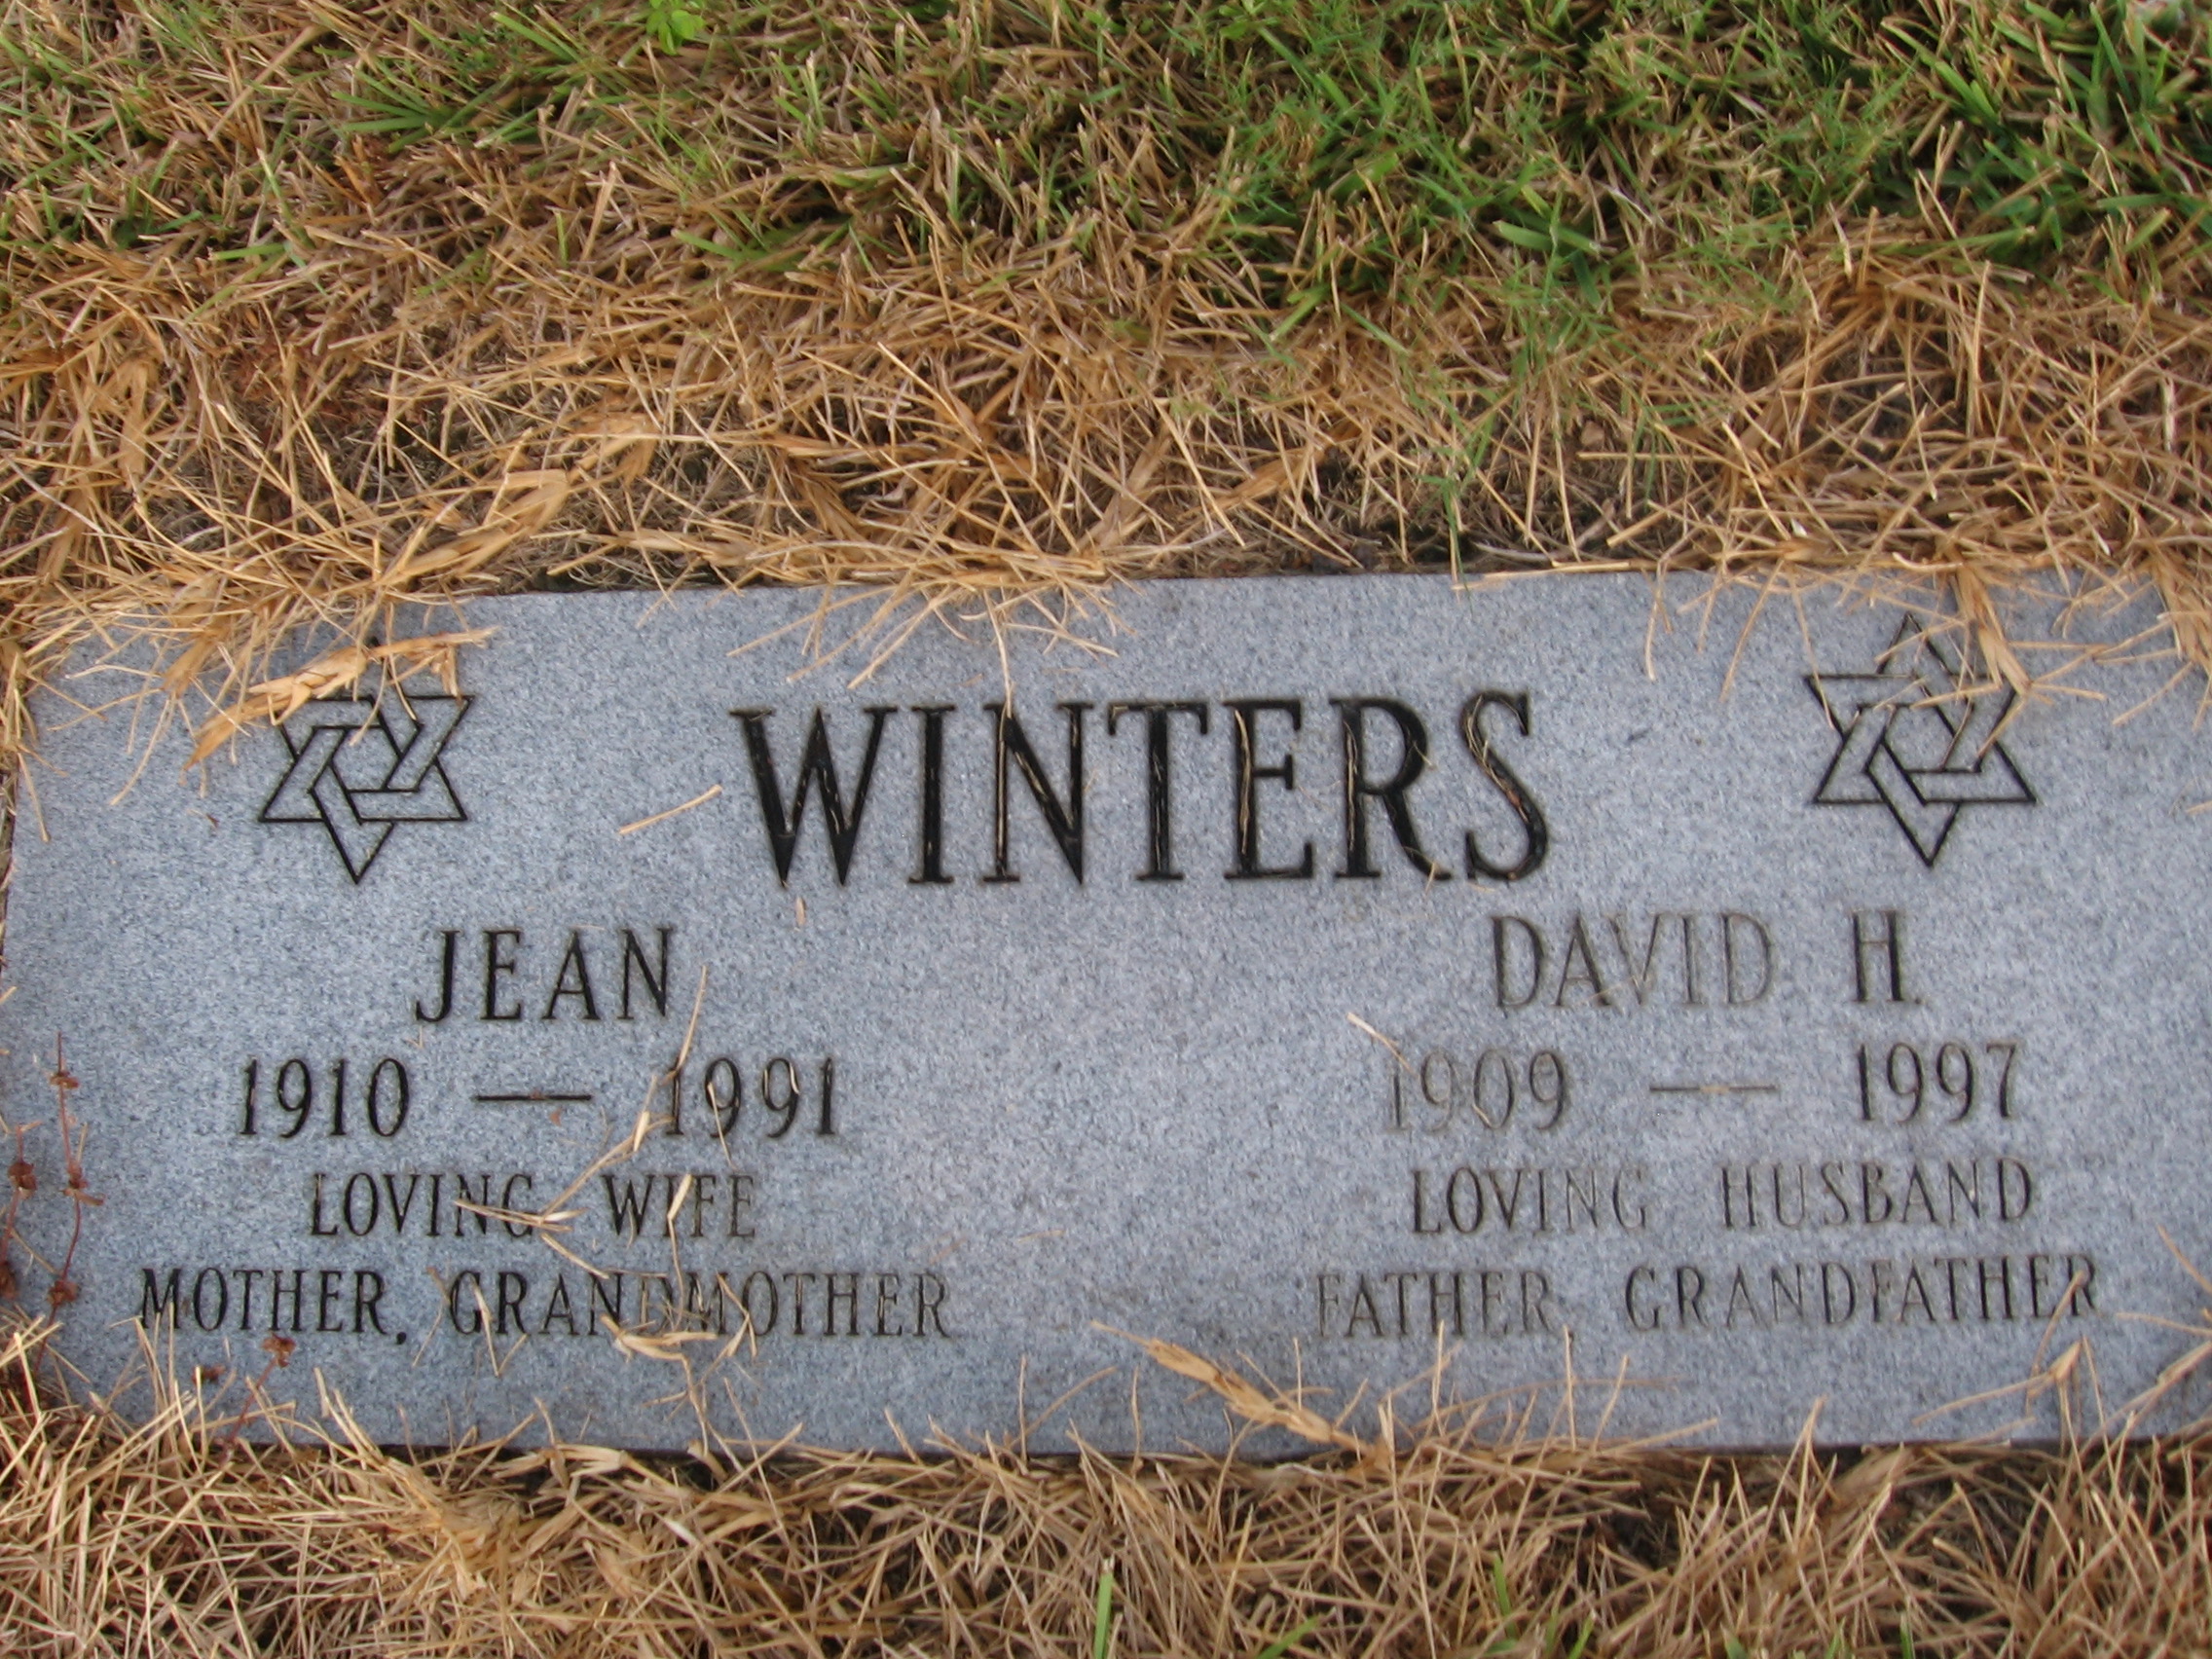 David H Winters